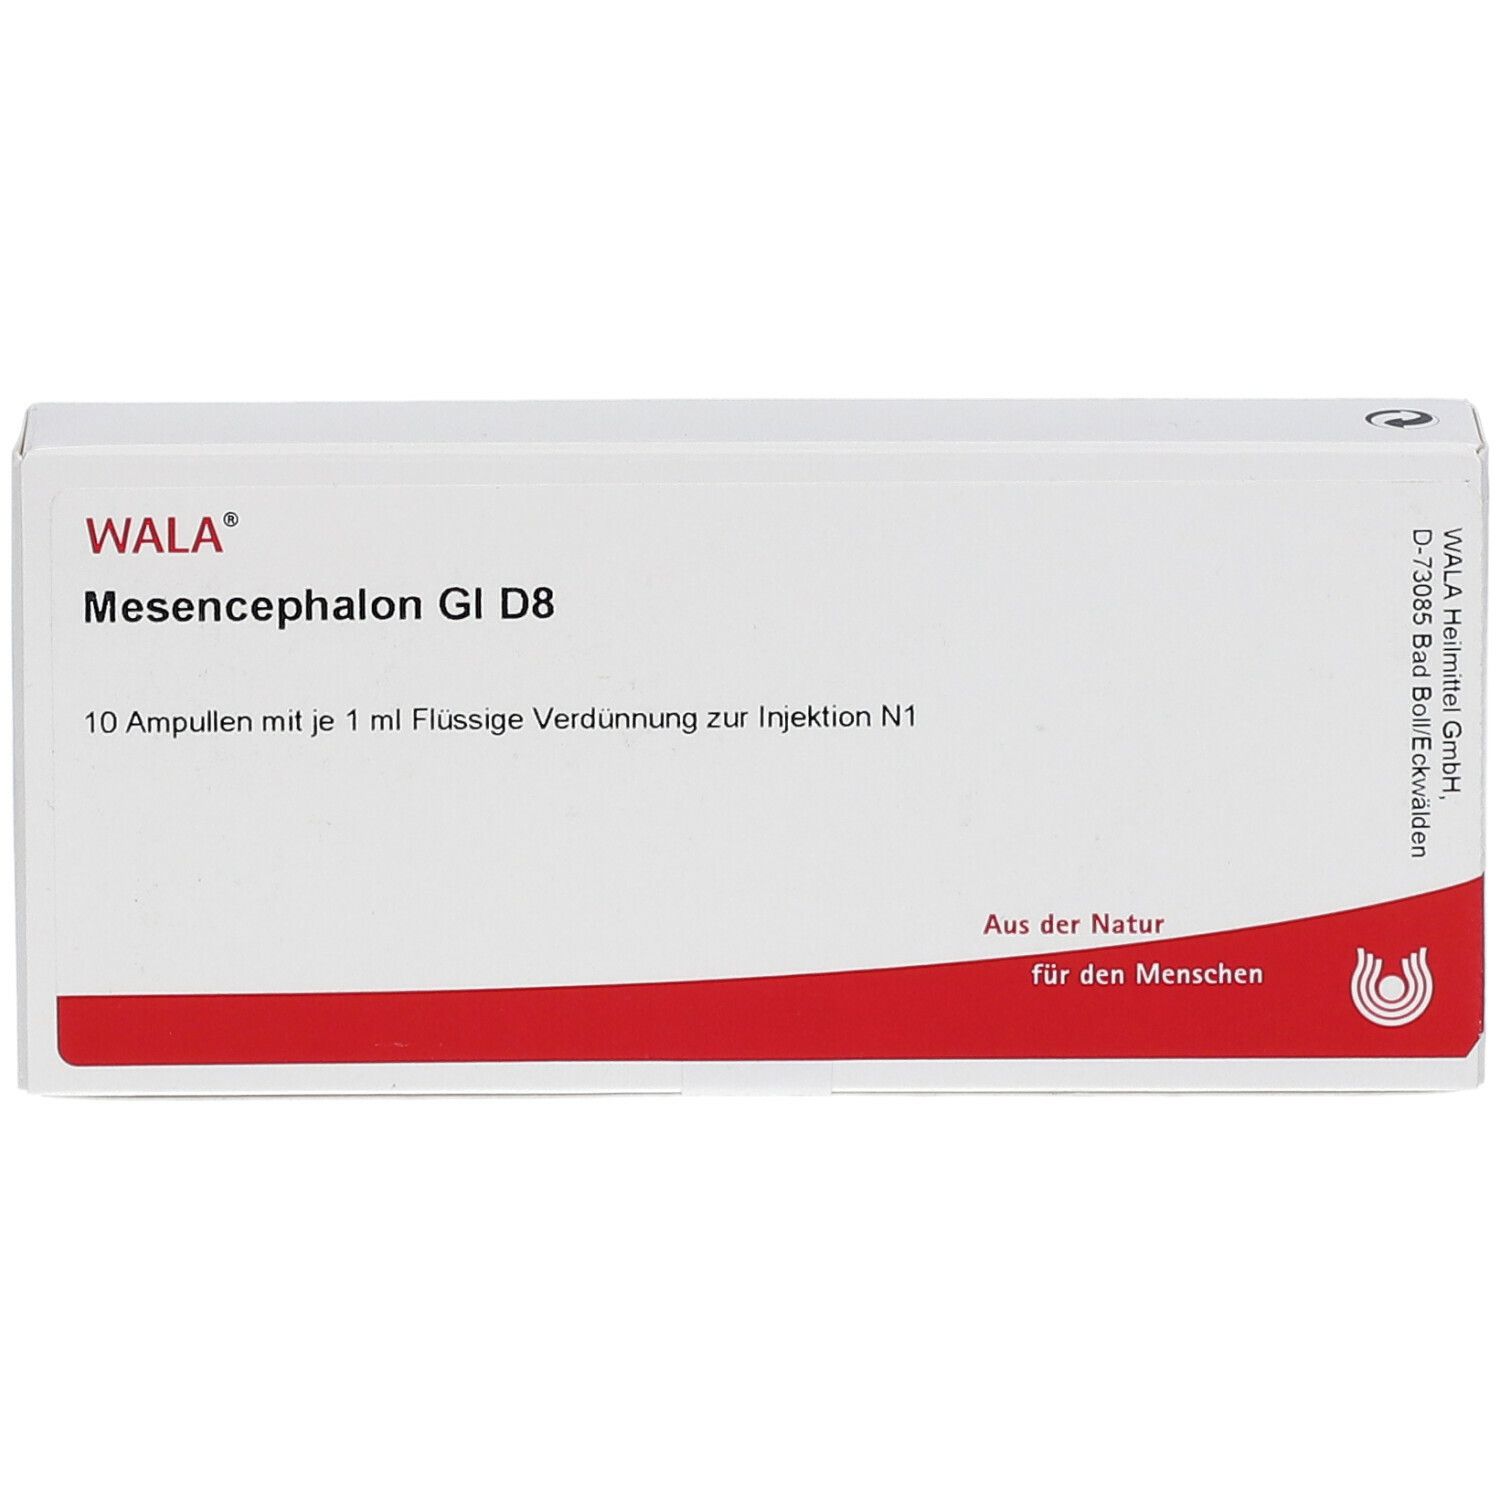 WALA® Mesencephalon Gl D 8